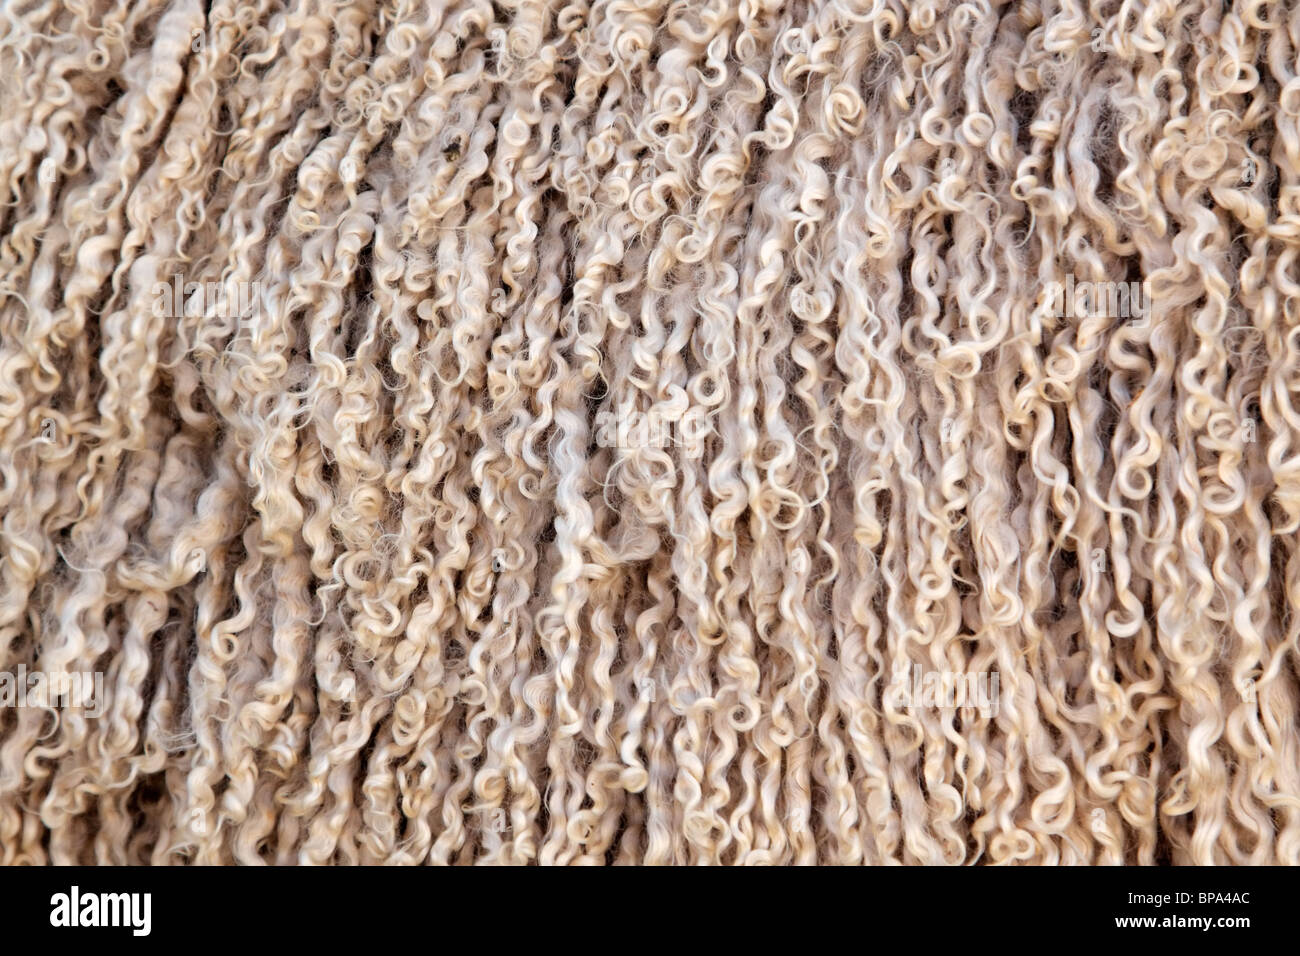 Angora-Ziege Wolle (Mohair) Hintergrund Stockfotografie - Alamy